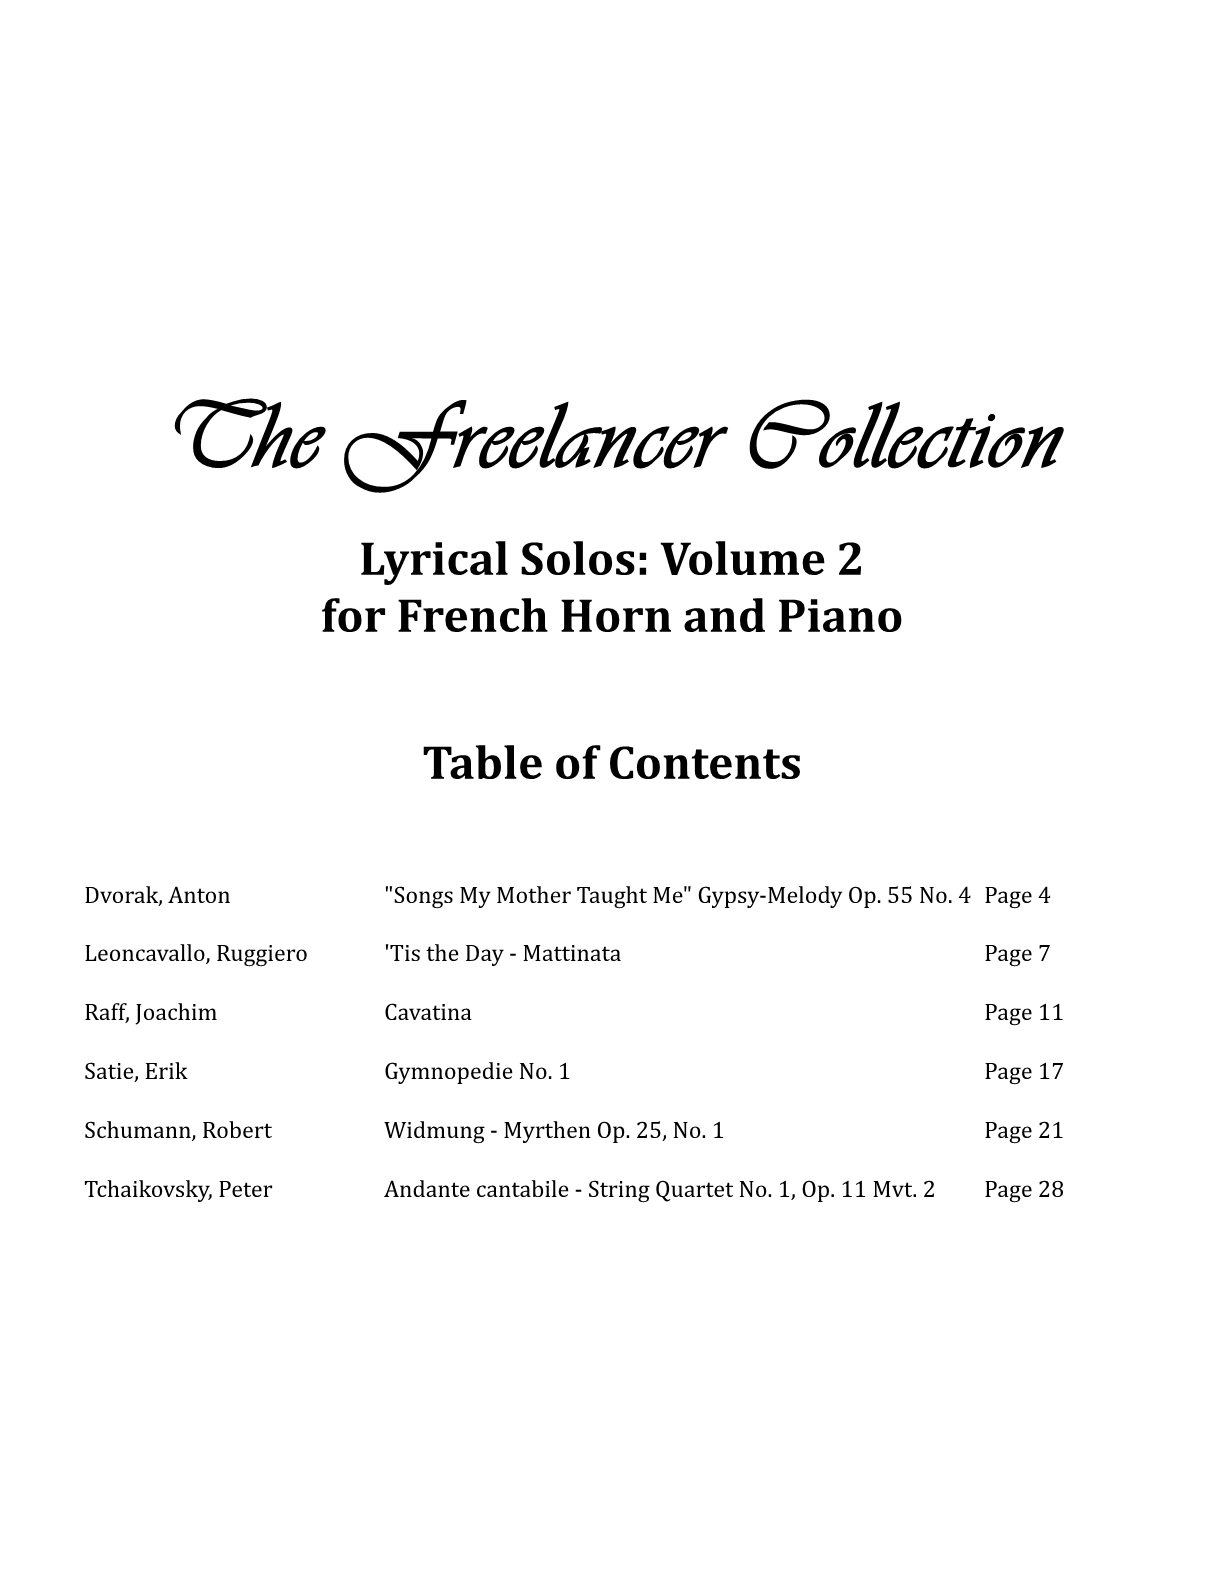 Hepler - Freelancer Collection Lyrical Solos Vol 2 (Hrn & Piano)